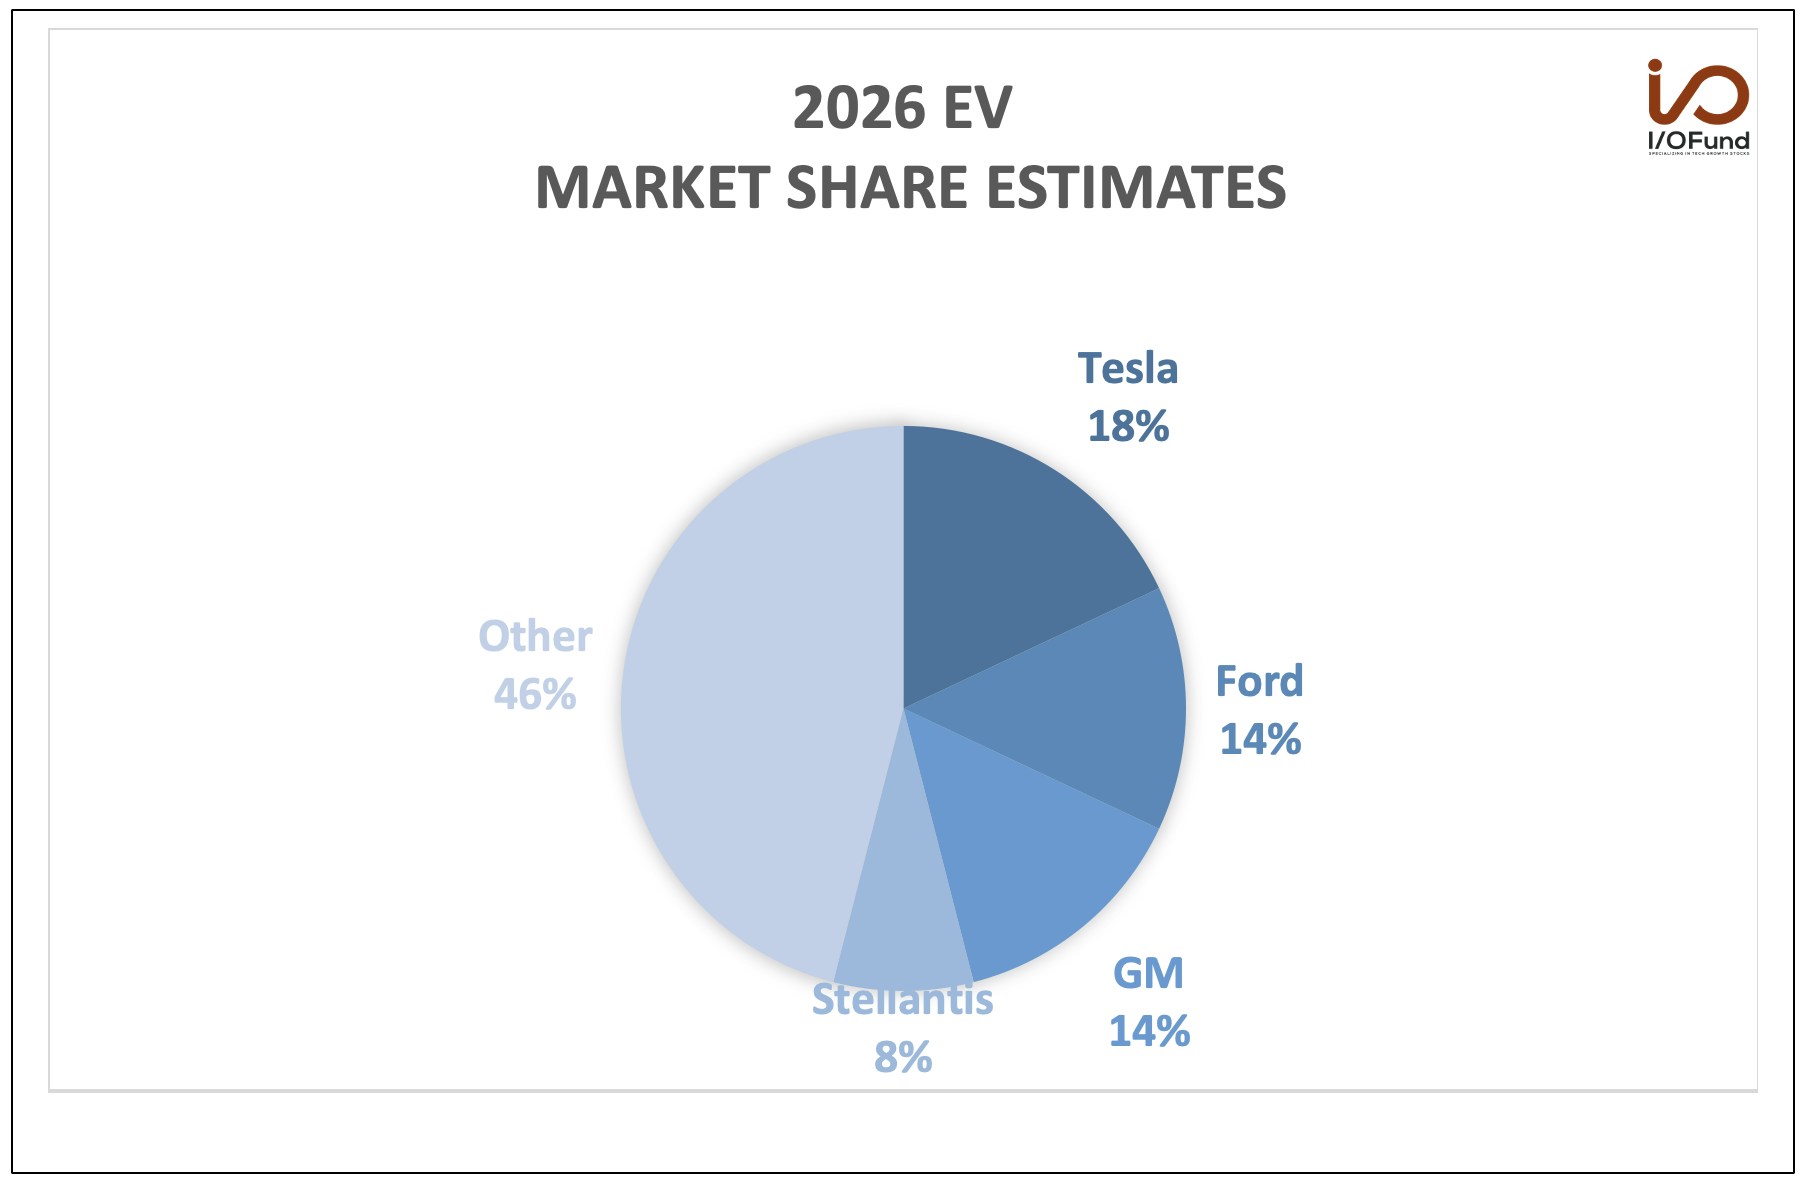 2026 EV market share estimates